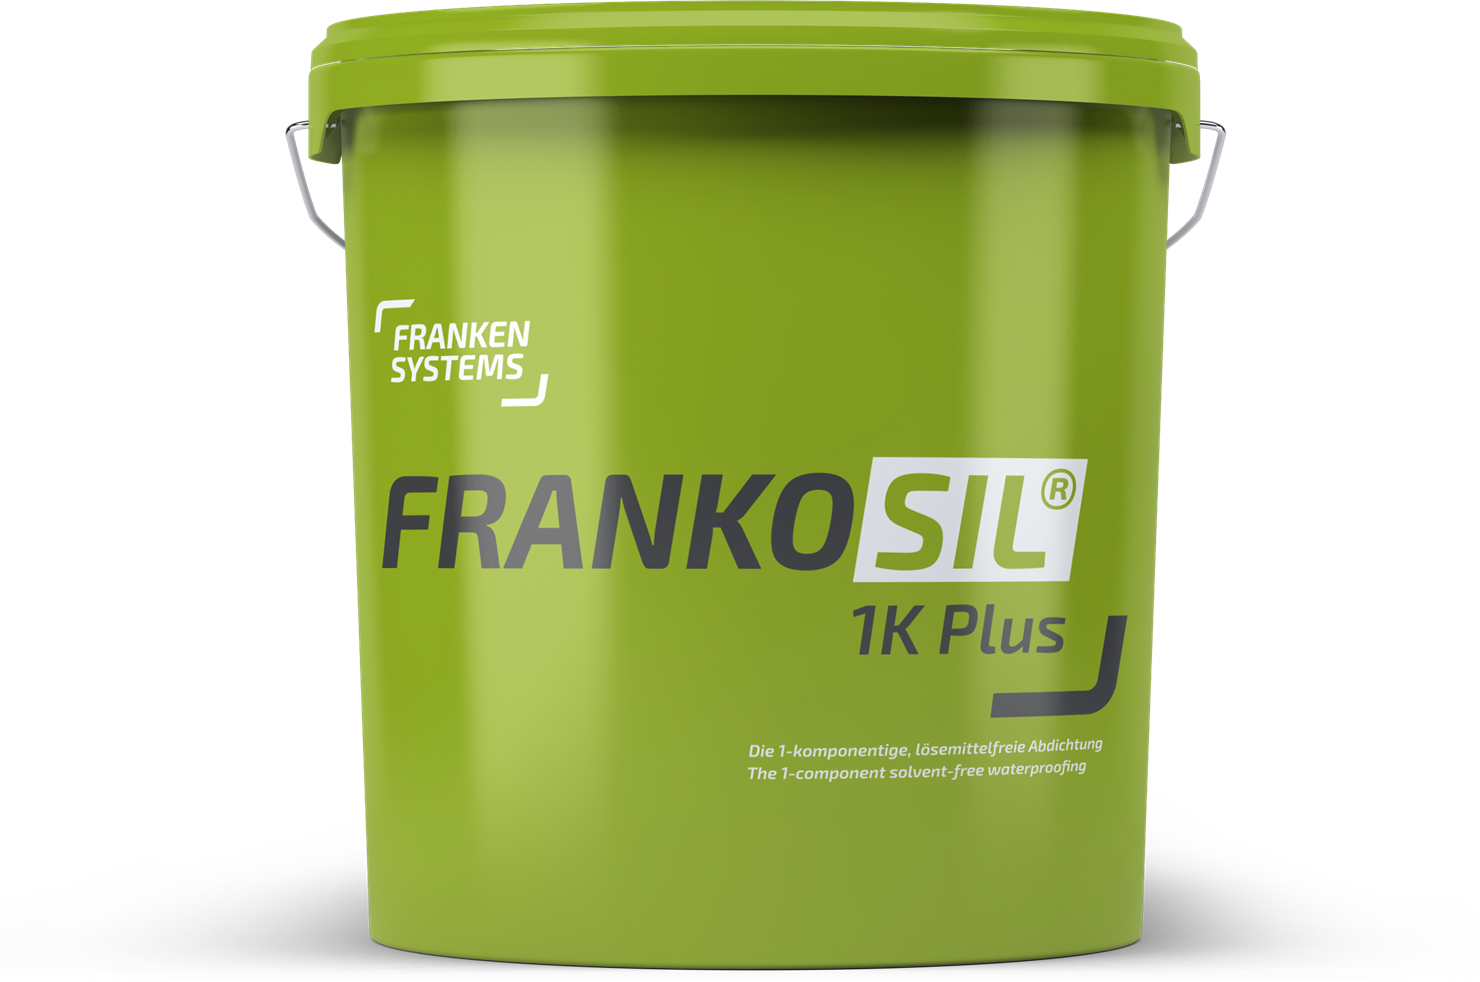 FRANKOSIL 1K Plus